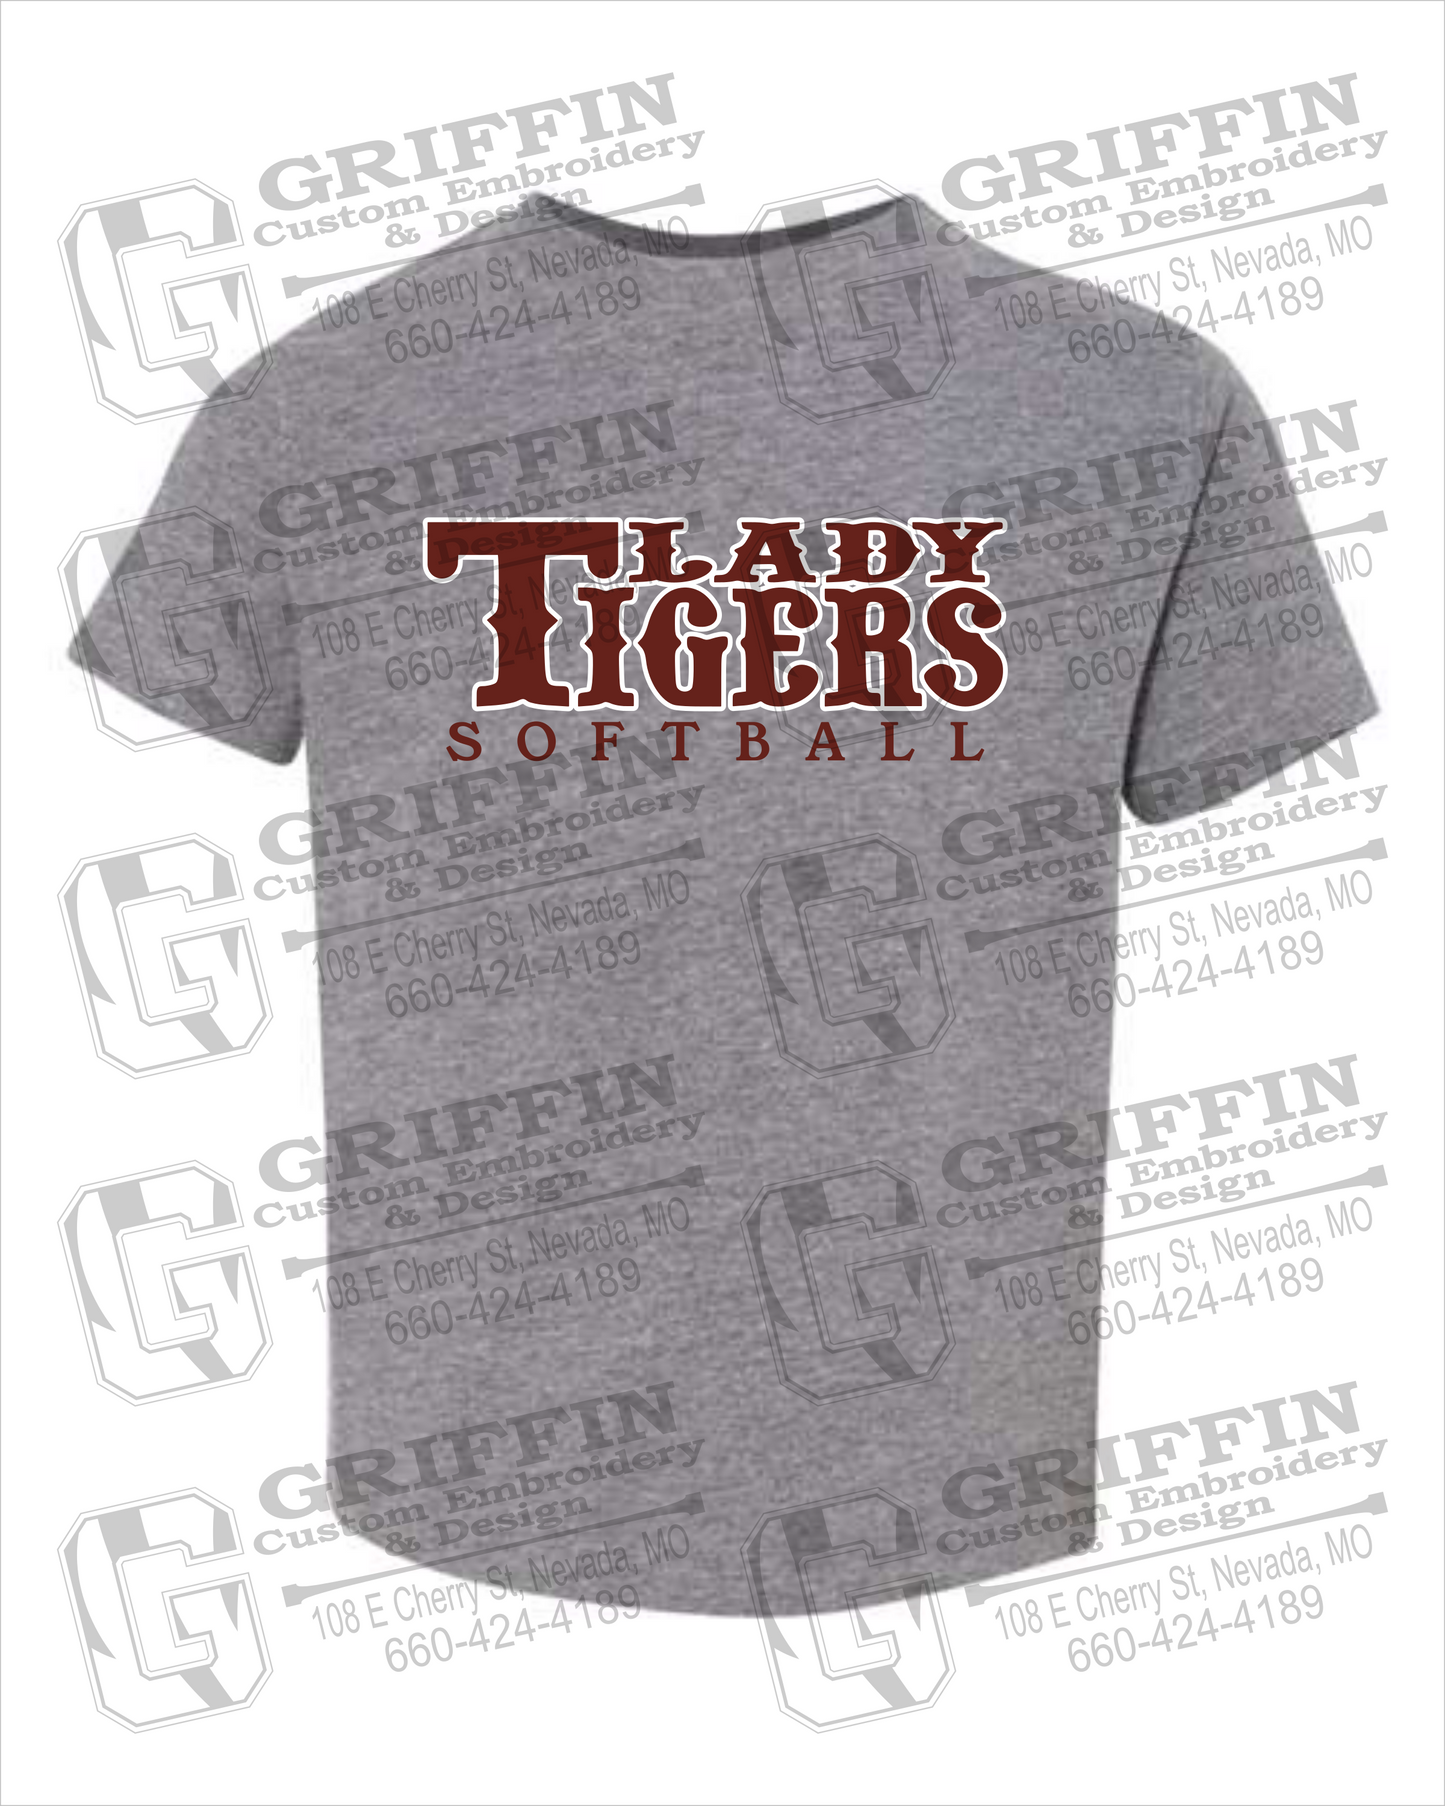 Nevada Tigers 24-F Toddler/Infant T-Shirt - Softball